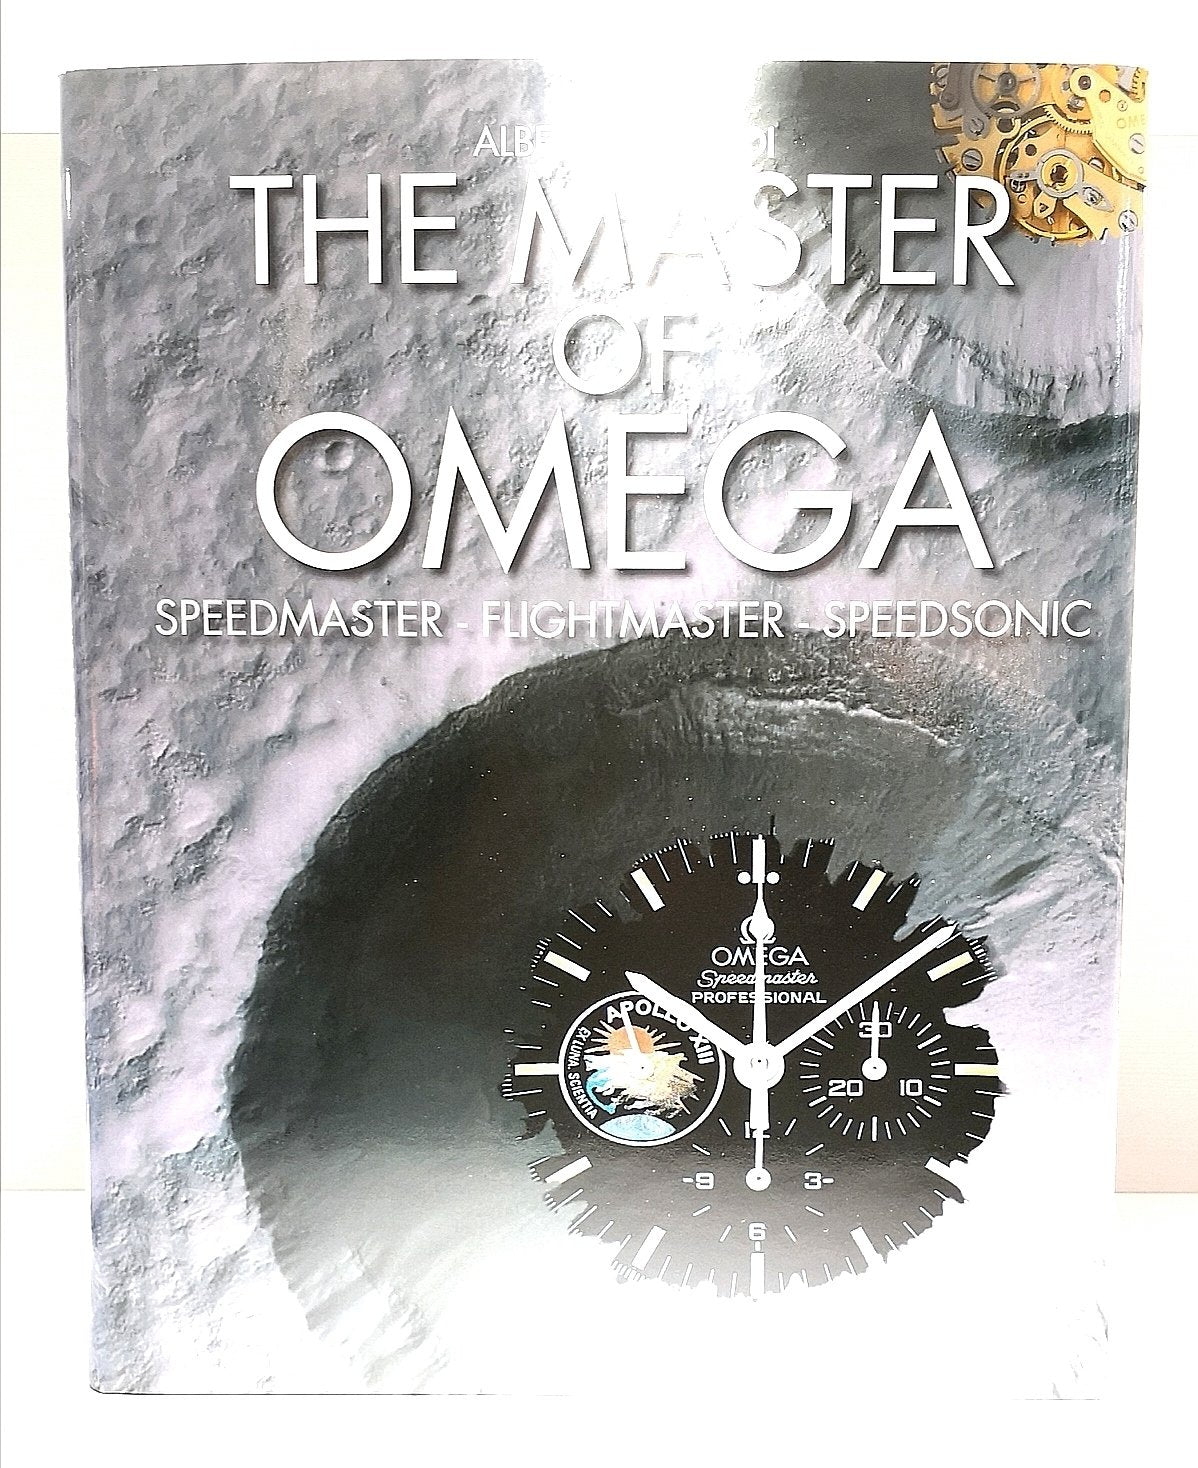 The Master of Omega - GTIME publishers - Alberto Isnardi